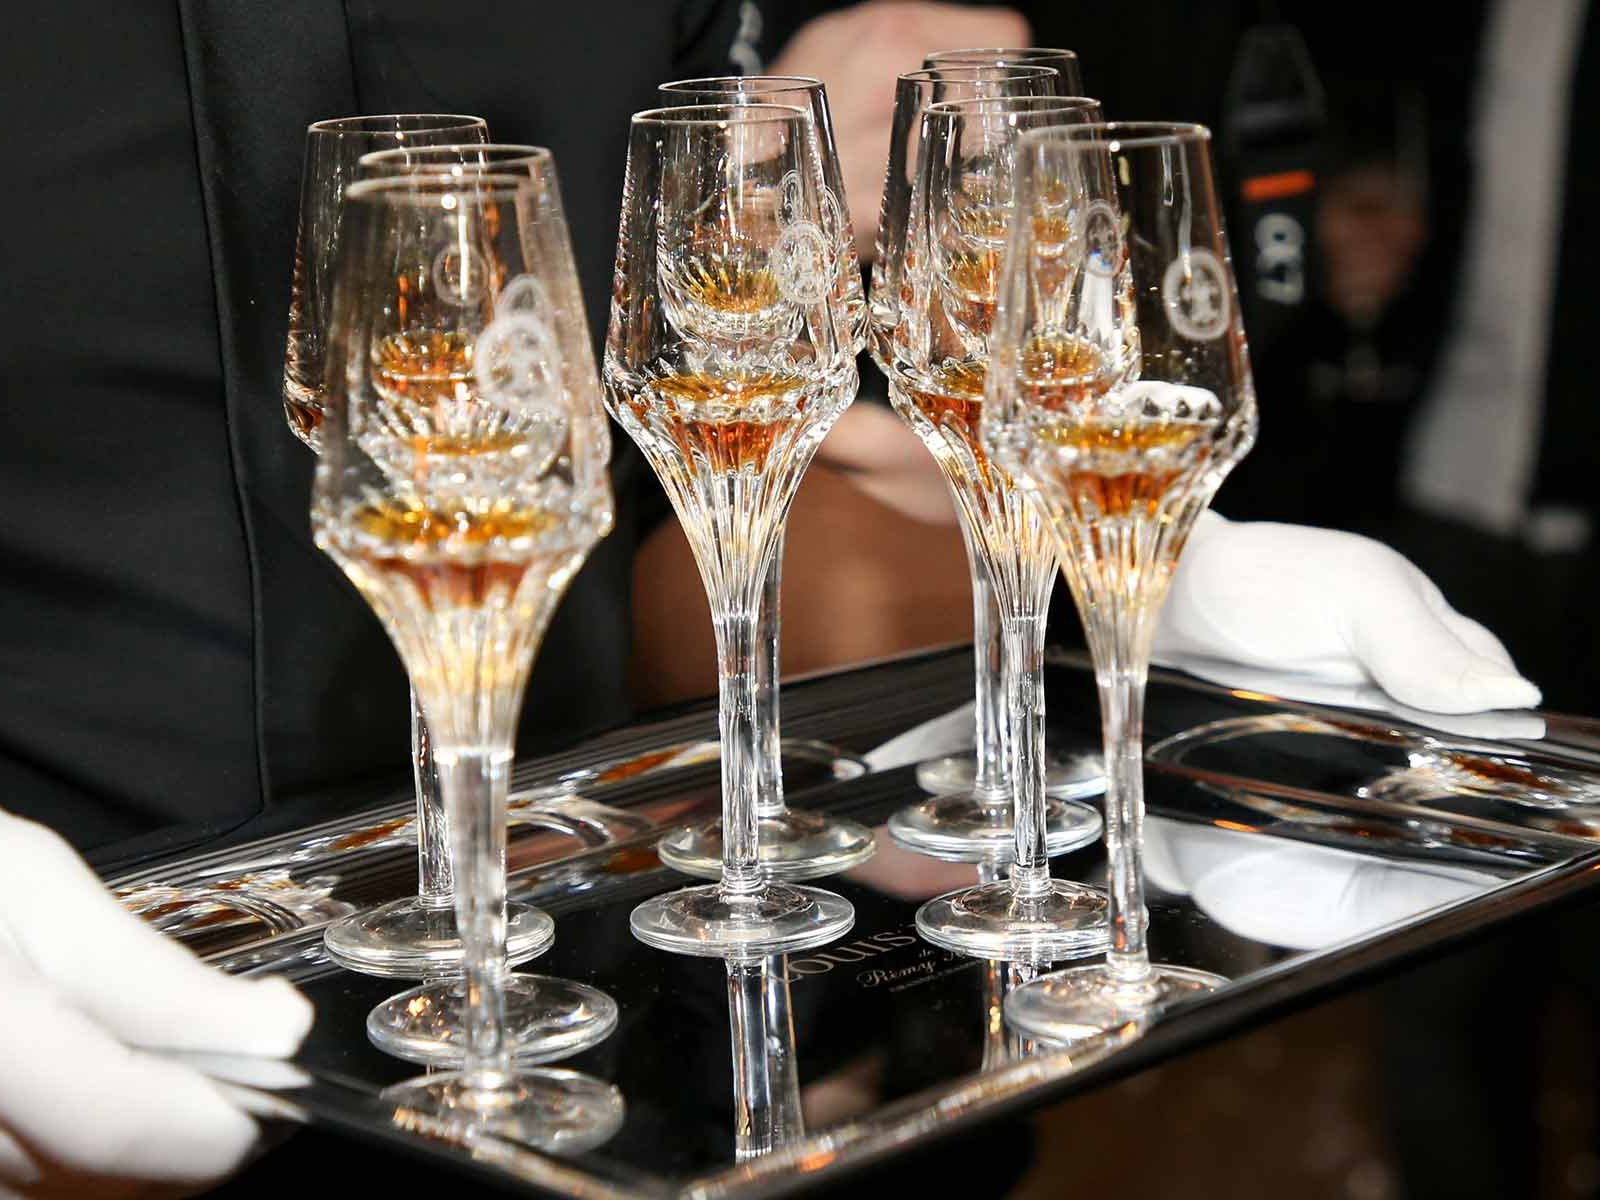 Remi Martin Louis XIII Release 2012 French Cognac - Enjoy Wine